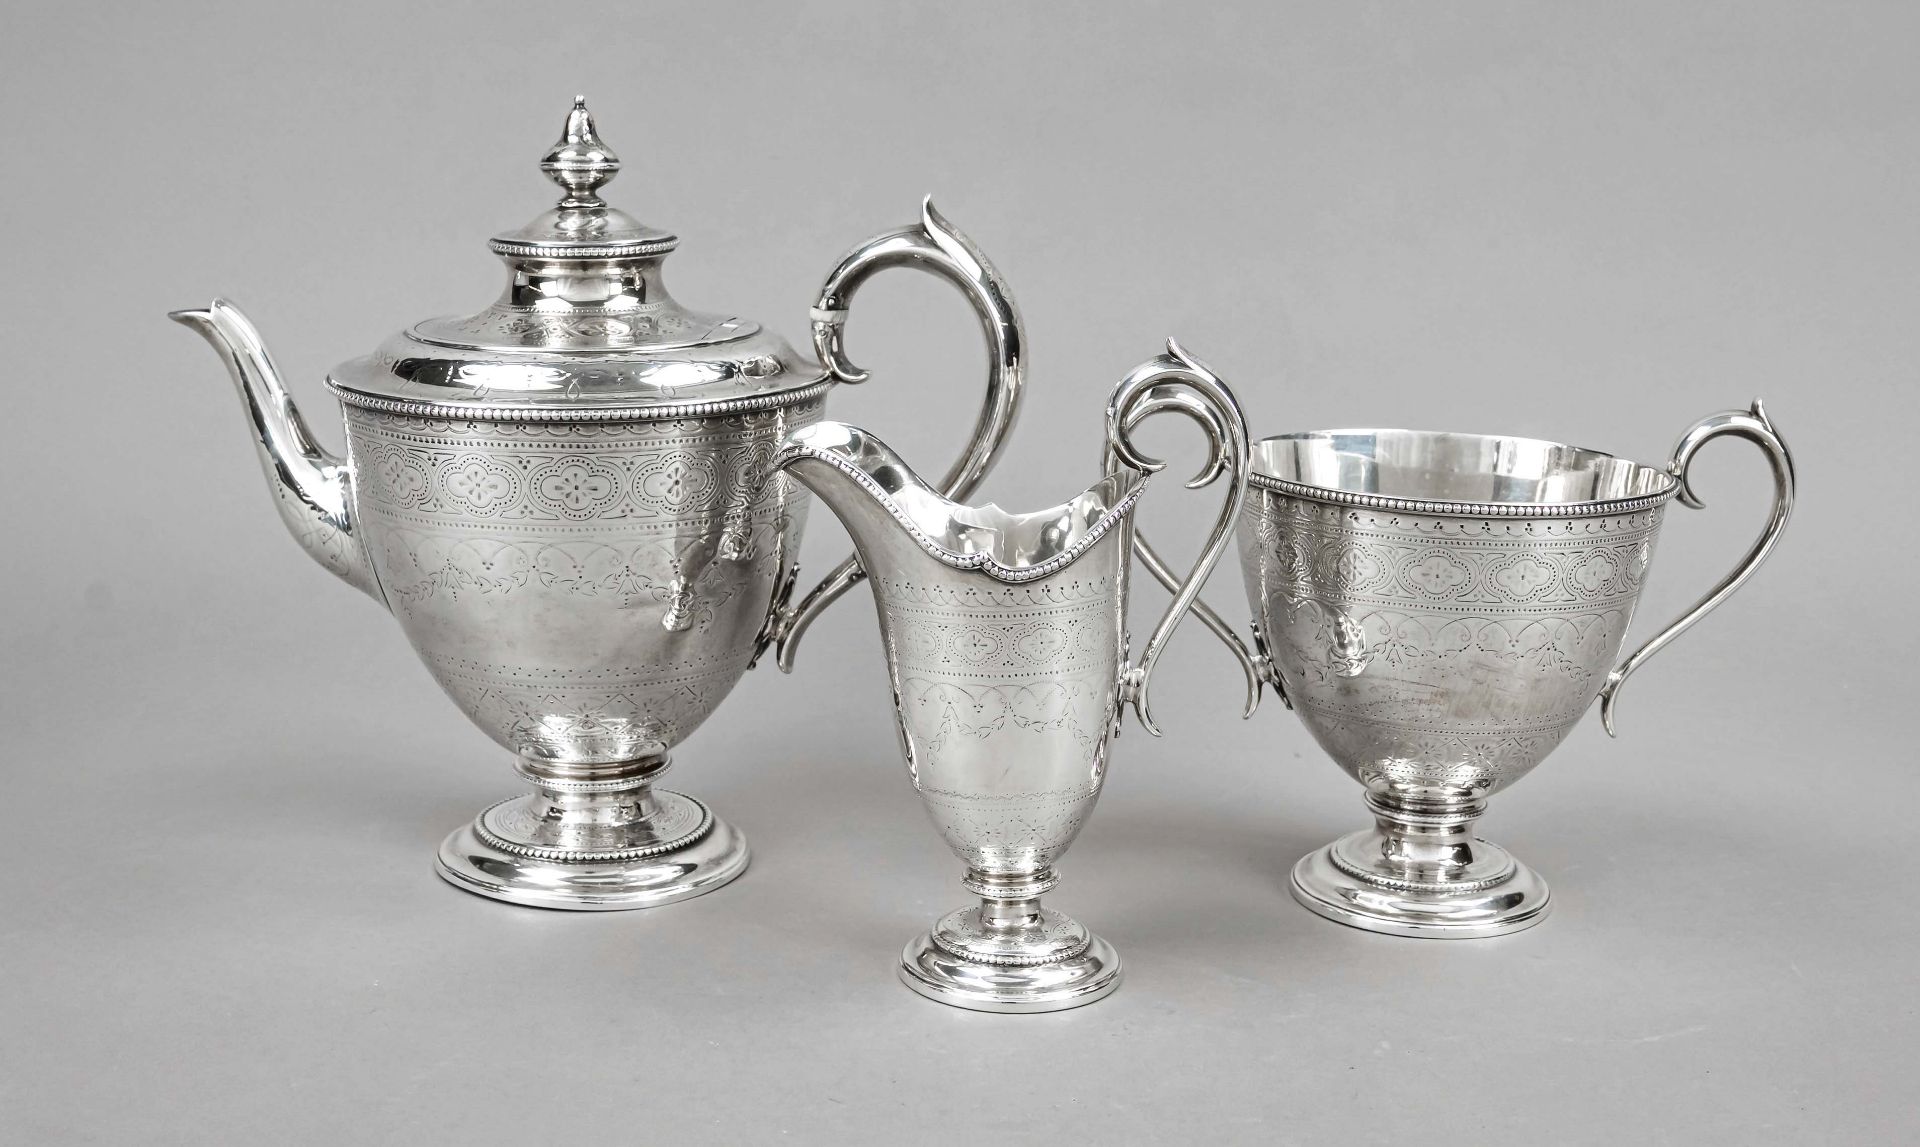 A three-piece tea pot, England, 1865, maker's mark Edward & John Barnard, London, sterling silver